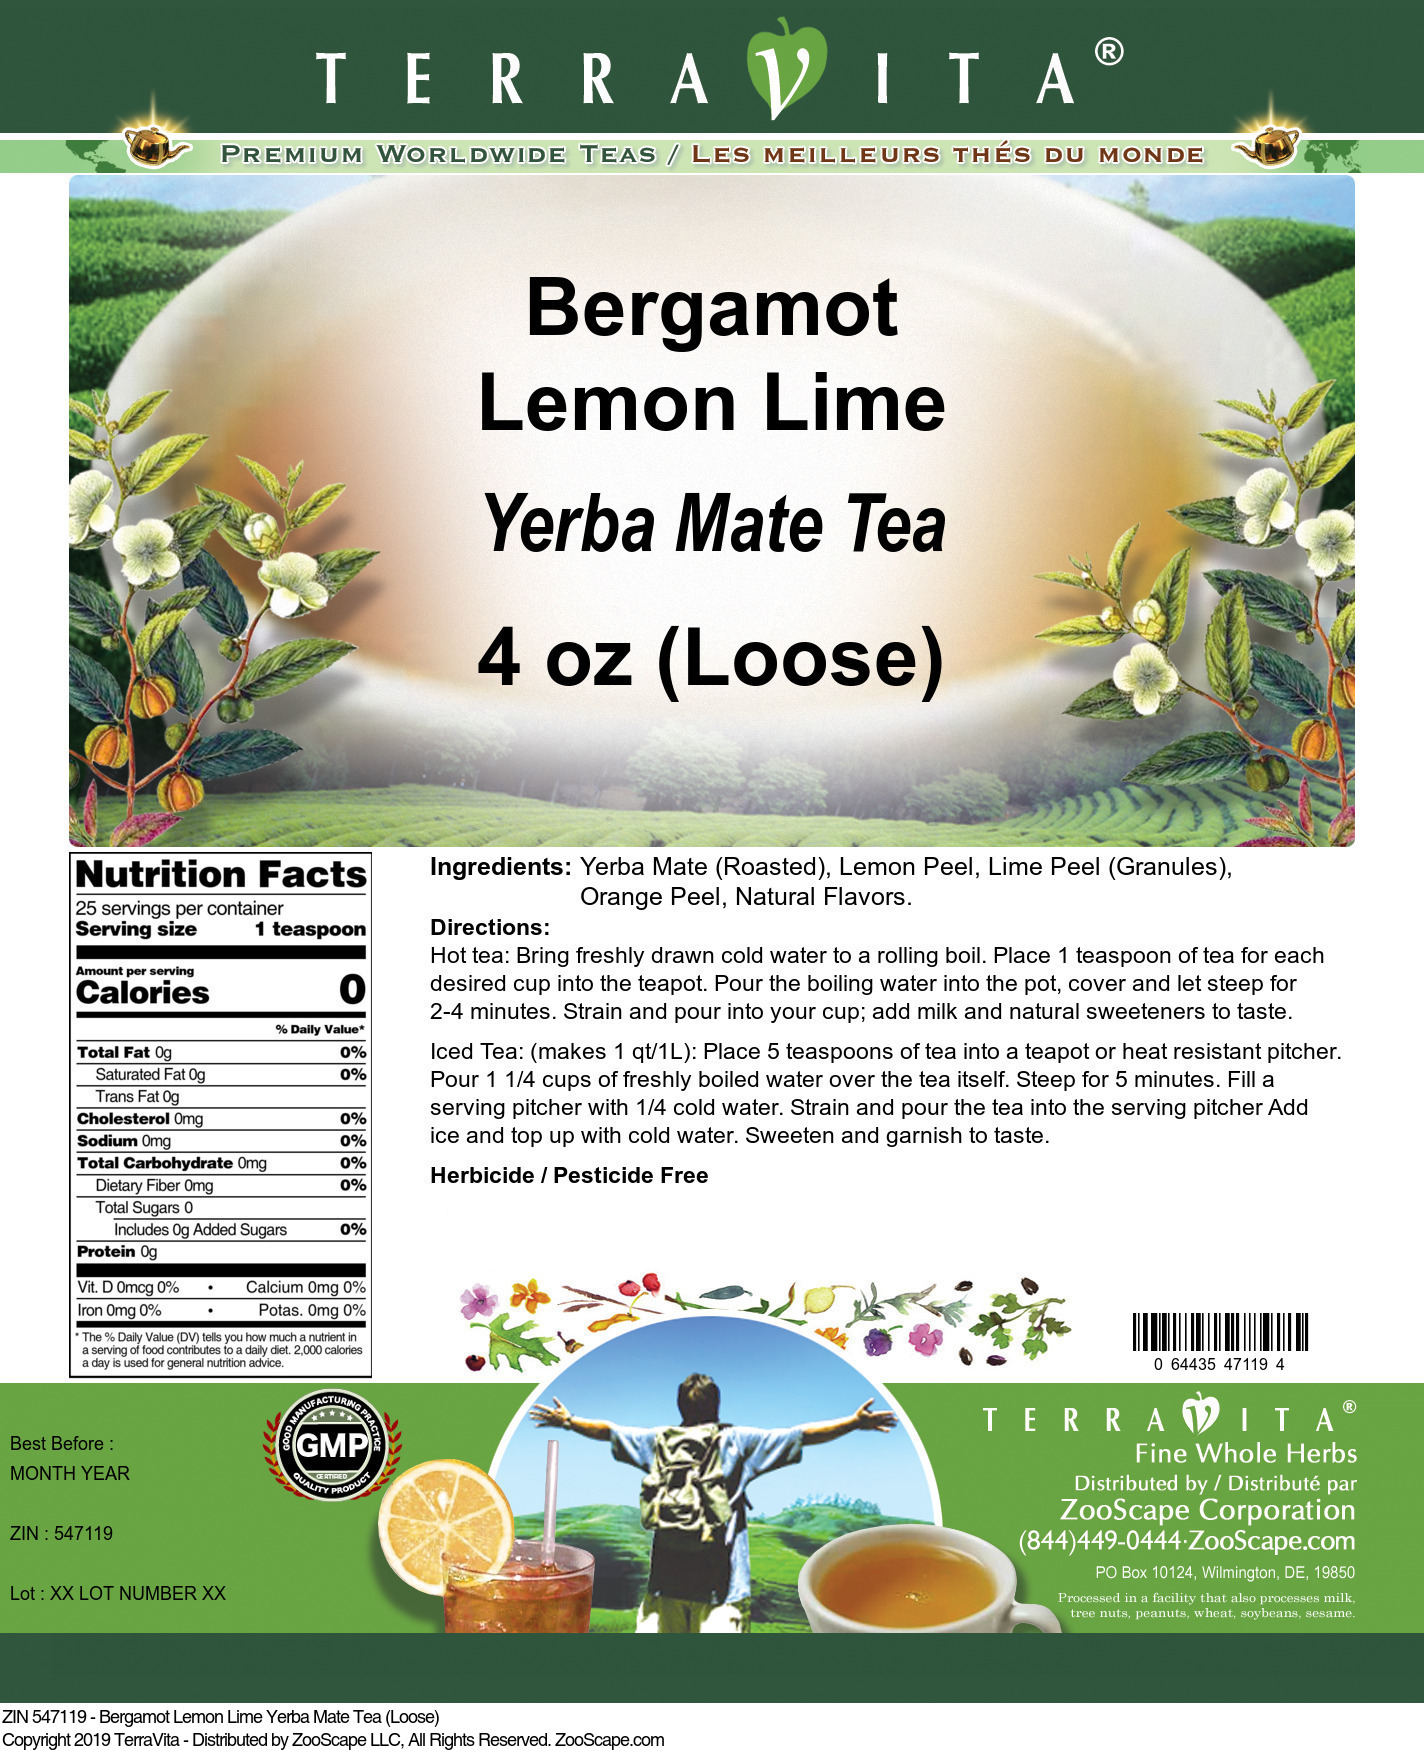 Bergamot Lemon Lime Yerba Mate Tea (Loose) - Label